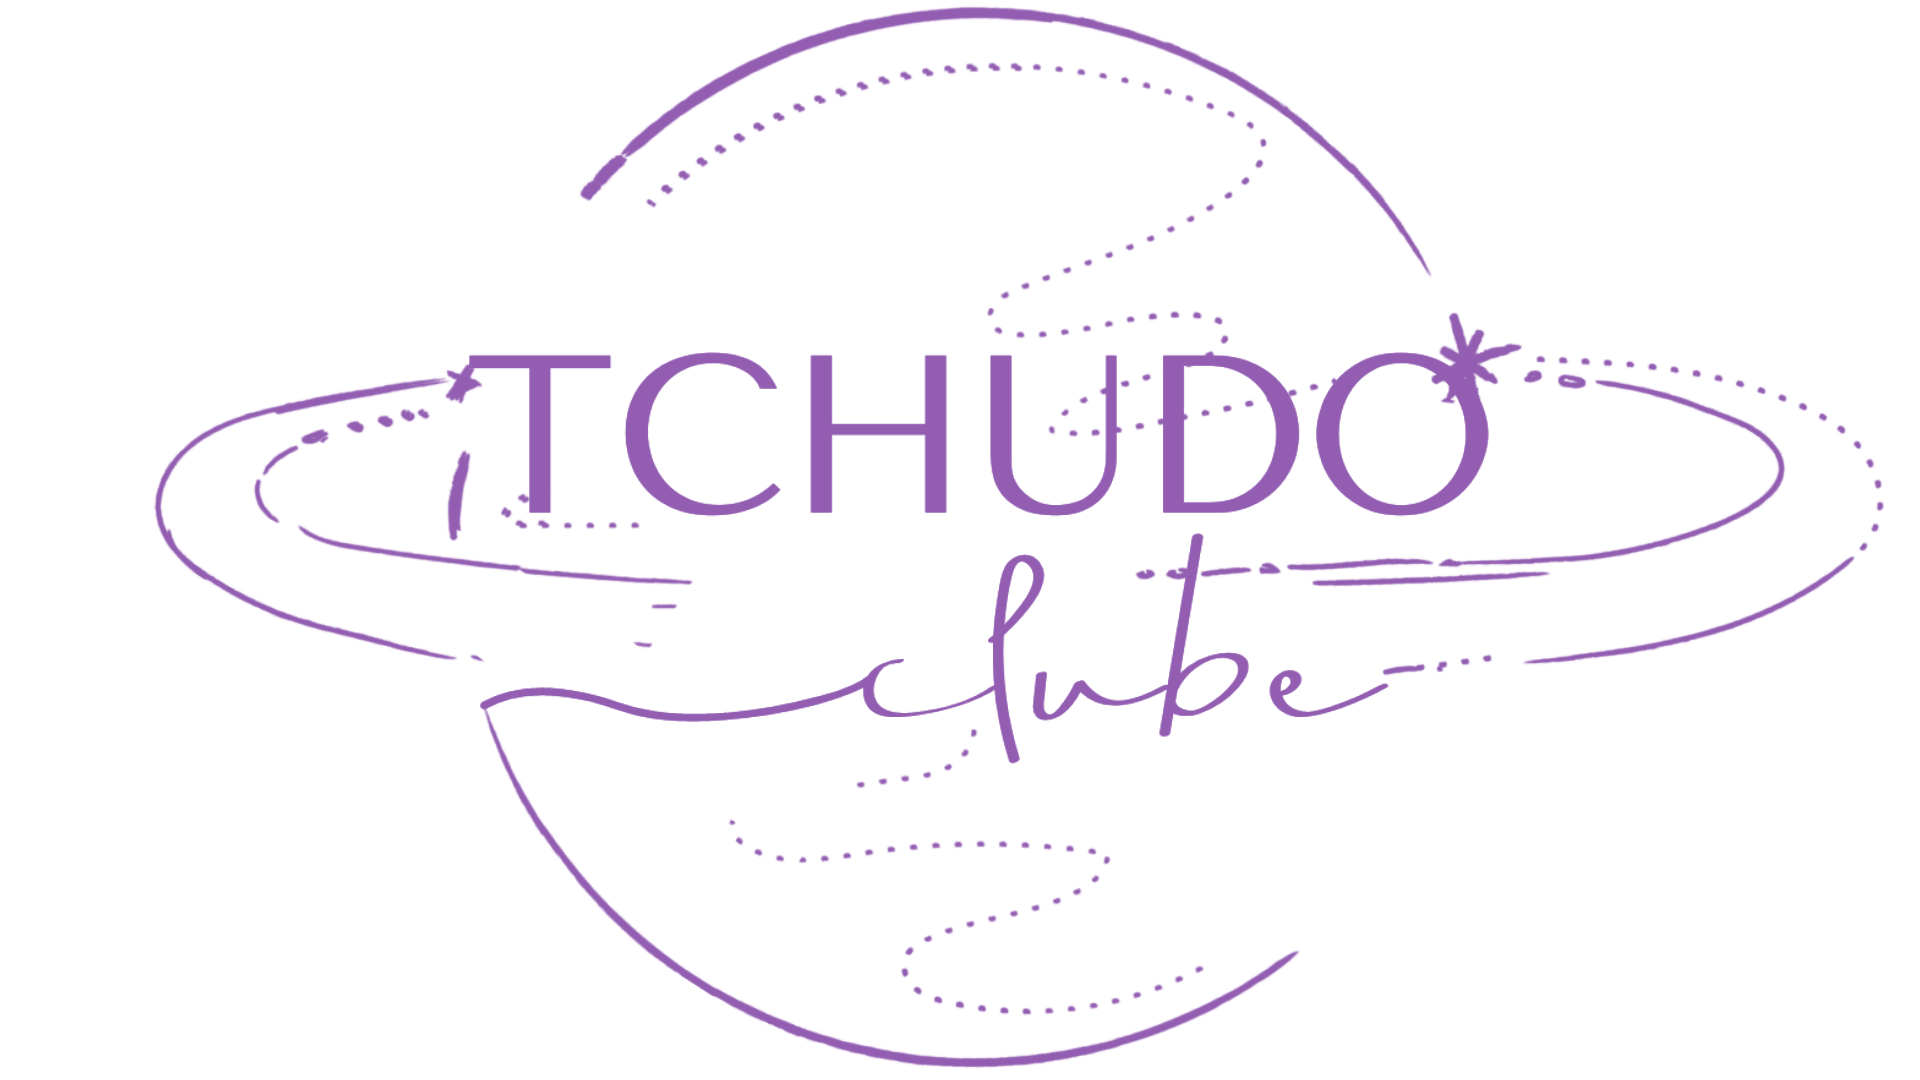 TCHUDO CLUBE